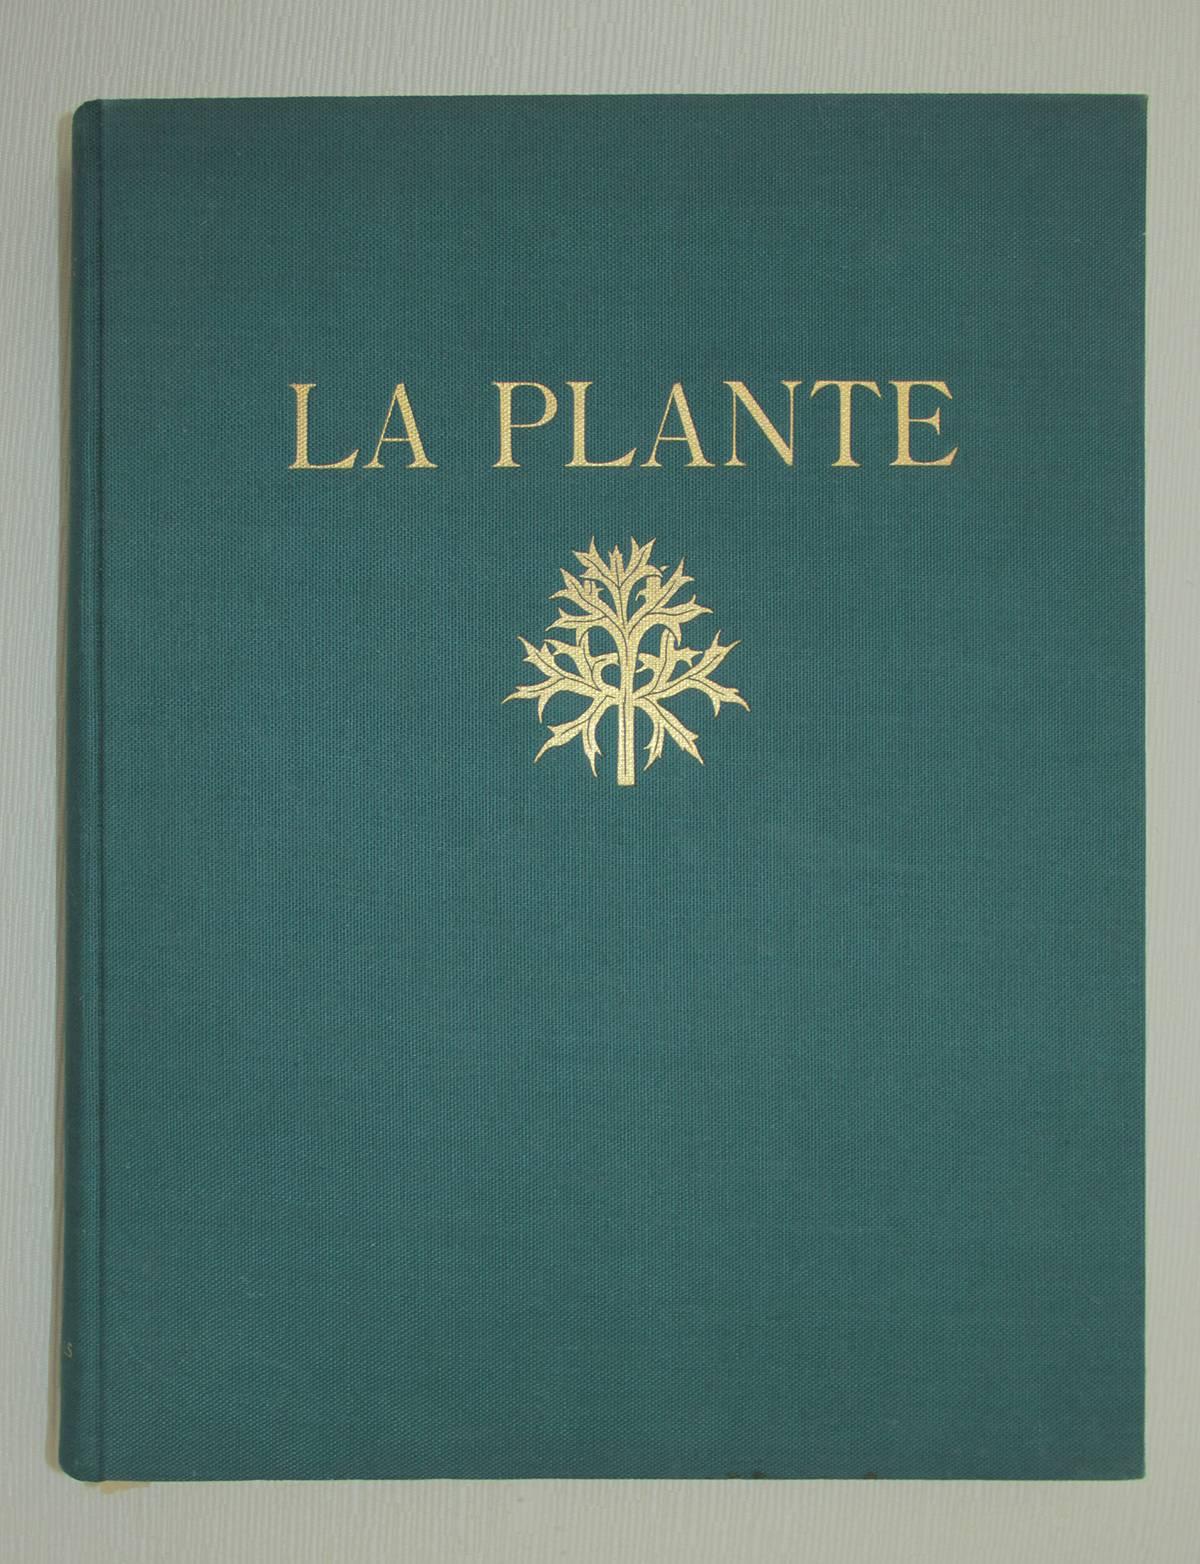 Karl (Charles) Blossfeldt (German, 1865–1932).

Extremely rare book titled 